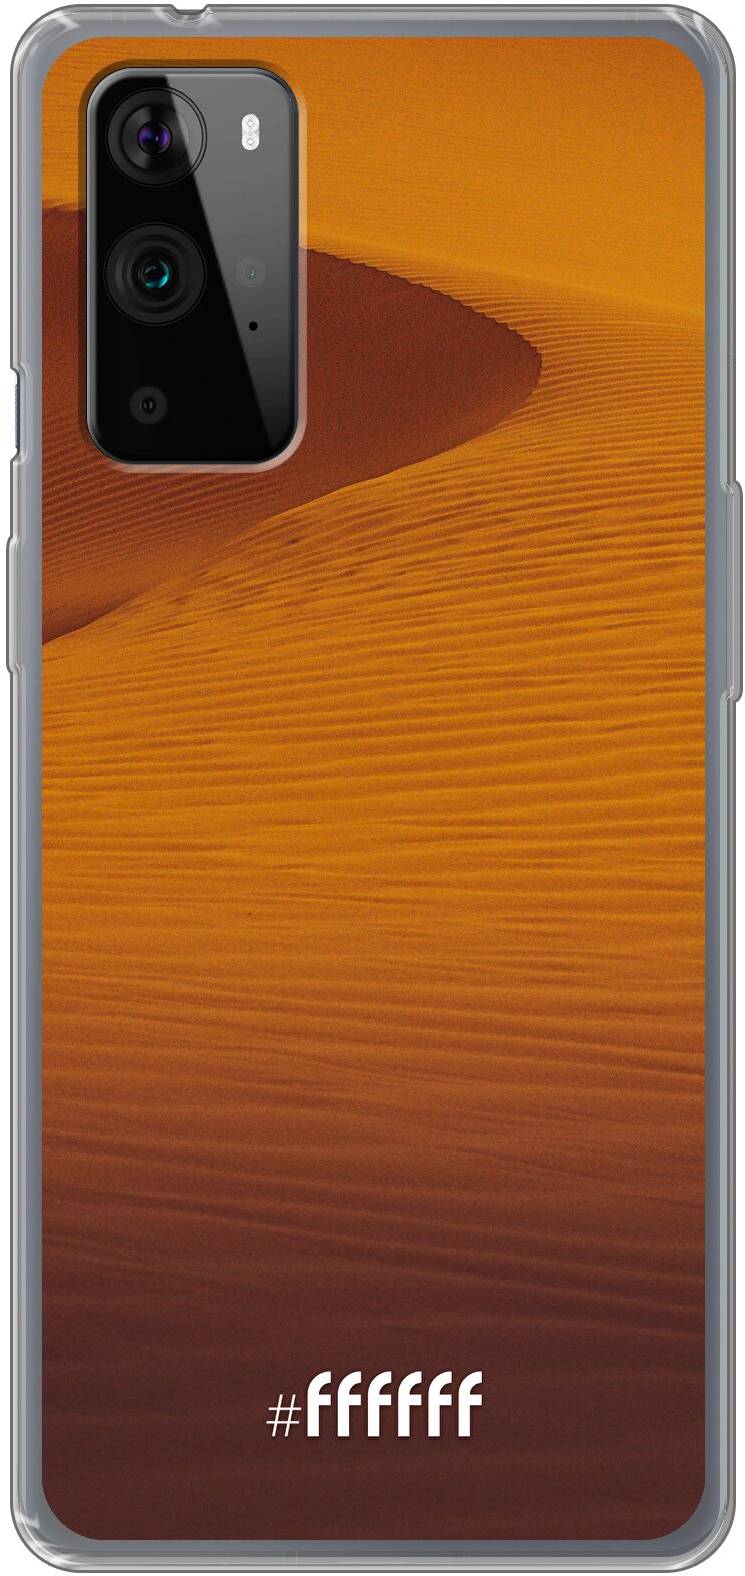 Sand Dunes 9 Pro